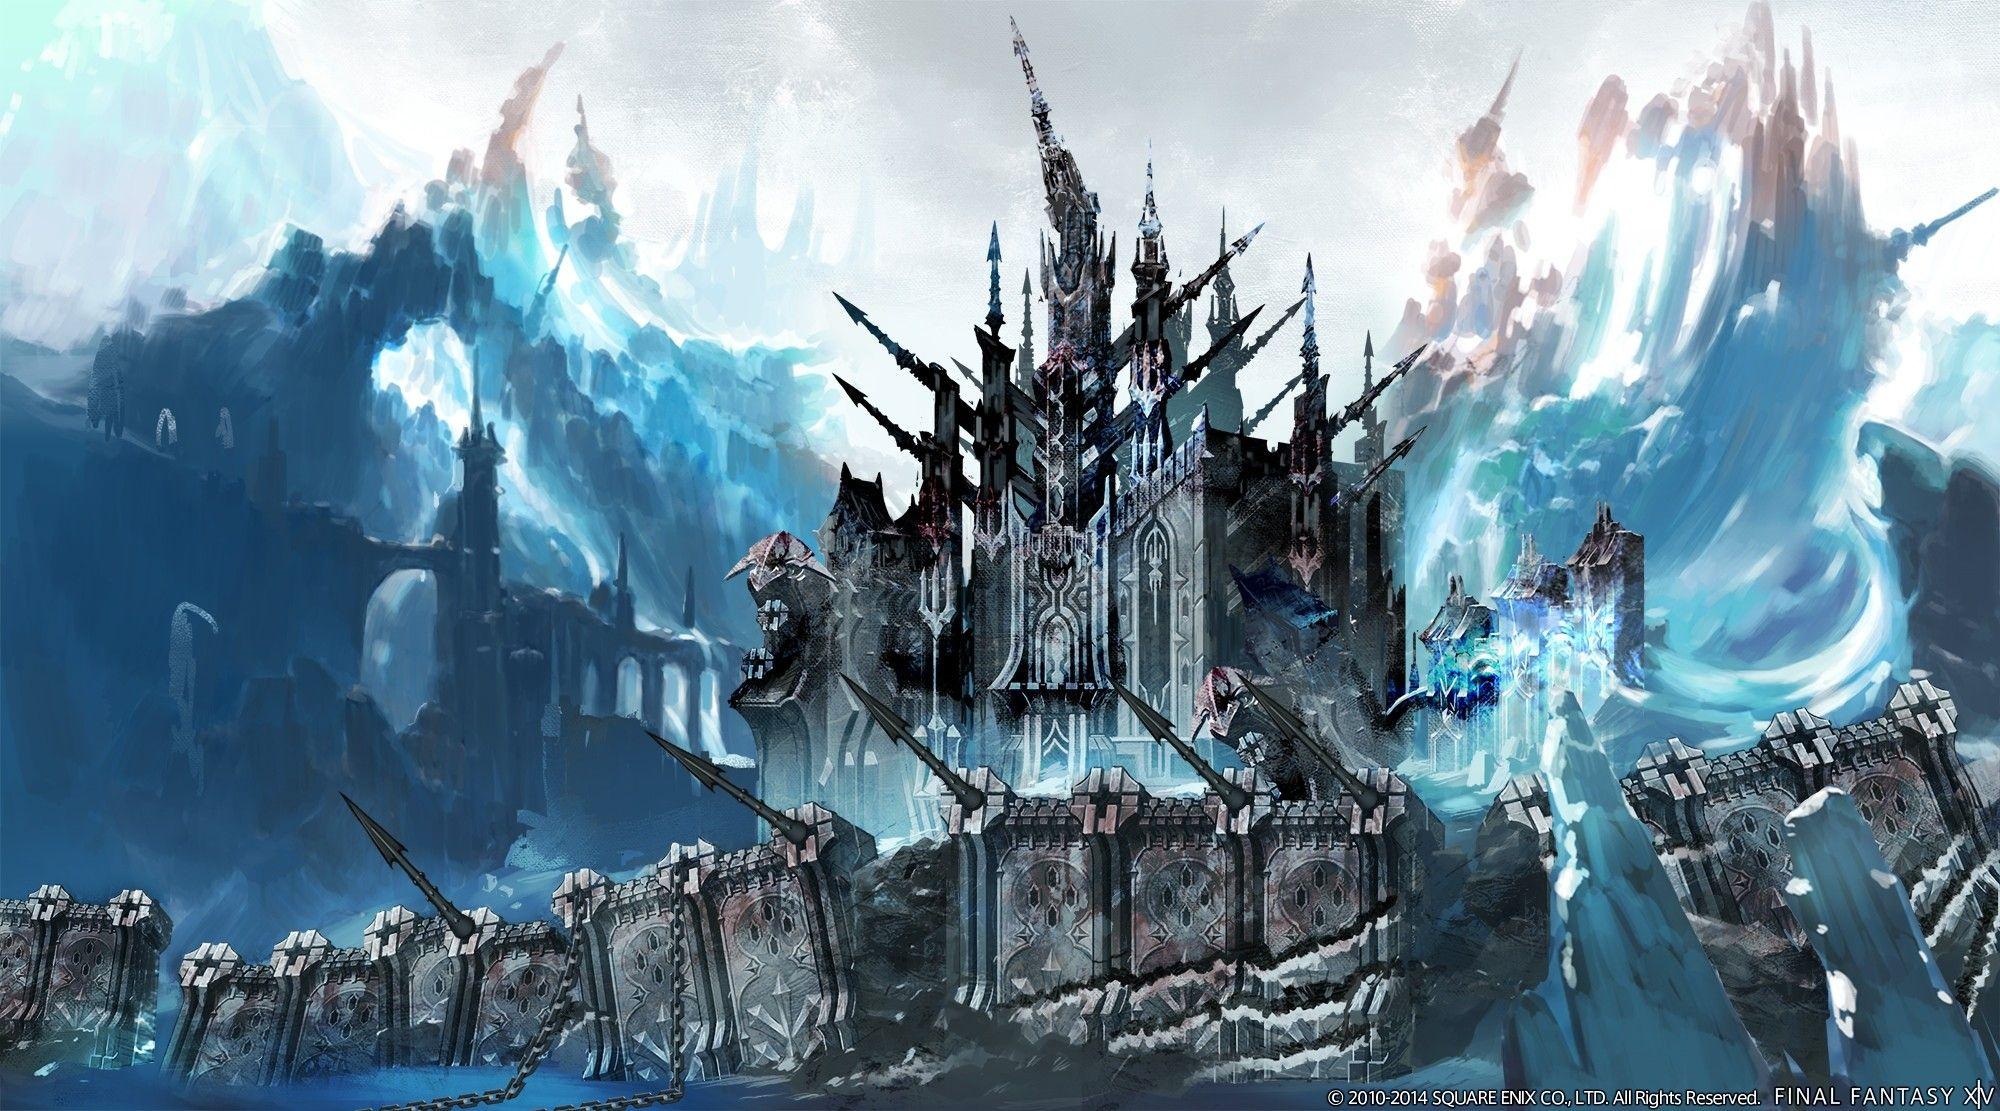 Final Fantasy Xiv Wallpapers Top Free Final Fantasy Xiv Backgrounds Wallpaperaccess